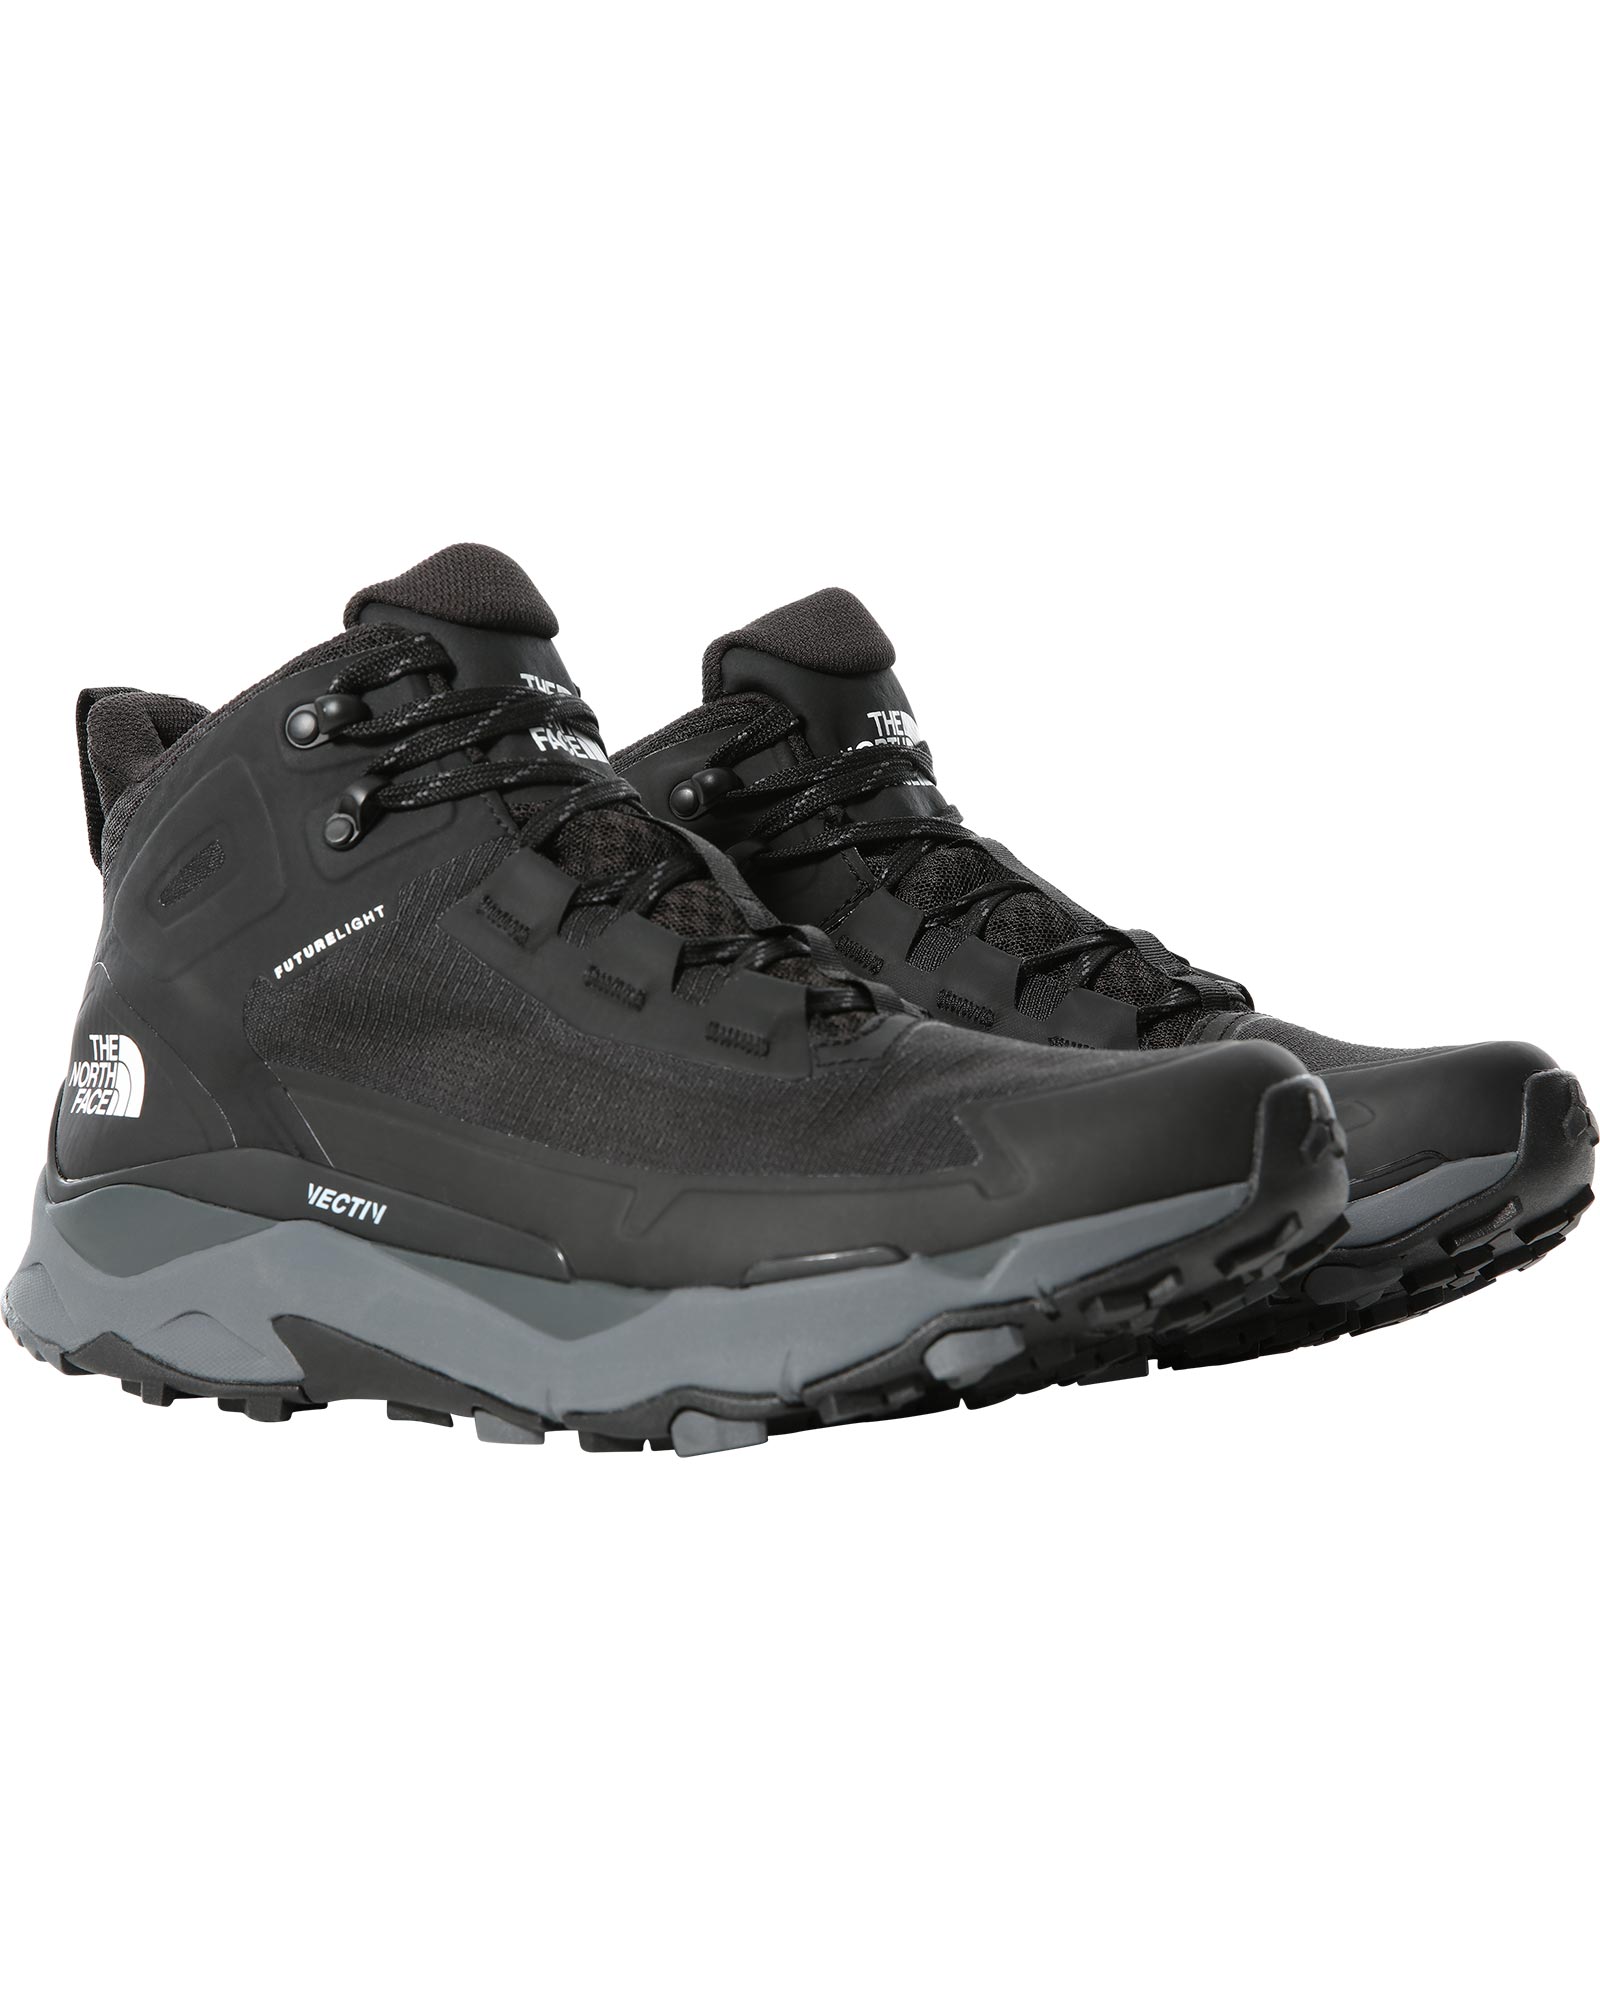 The North Face Vectiv Exploris FUTURELIGHT Mid Men’s Boots - TNF Black/Zinc Grey UK 8